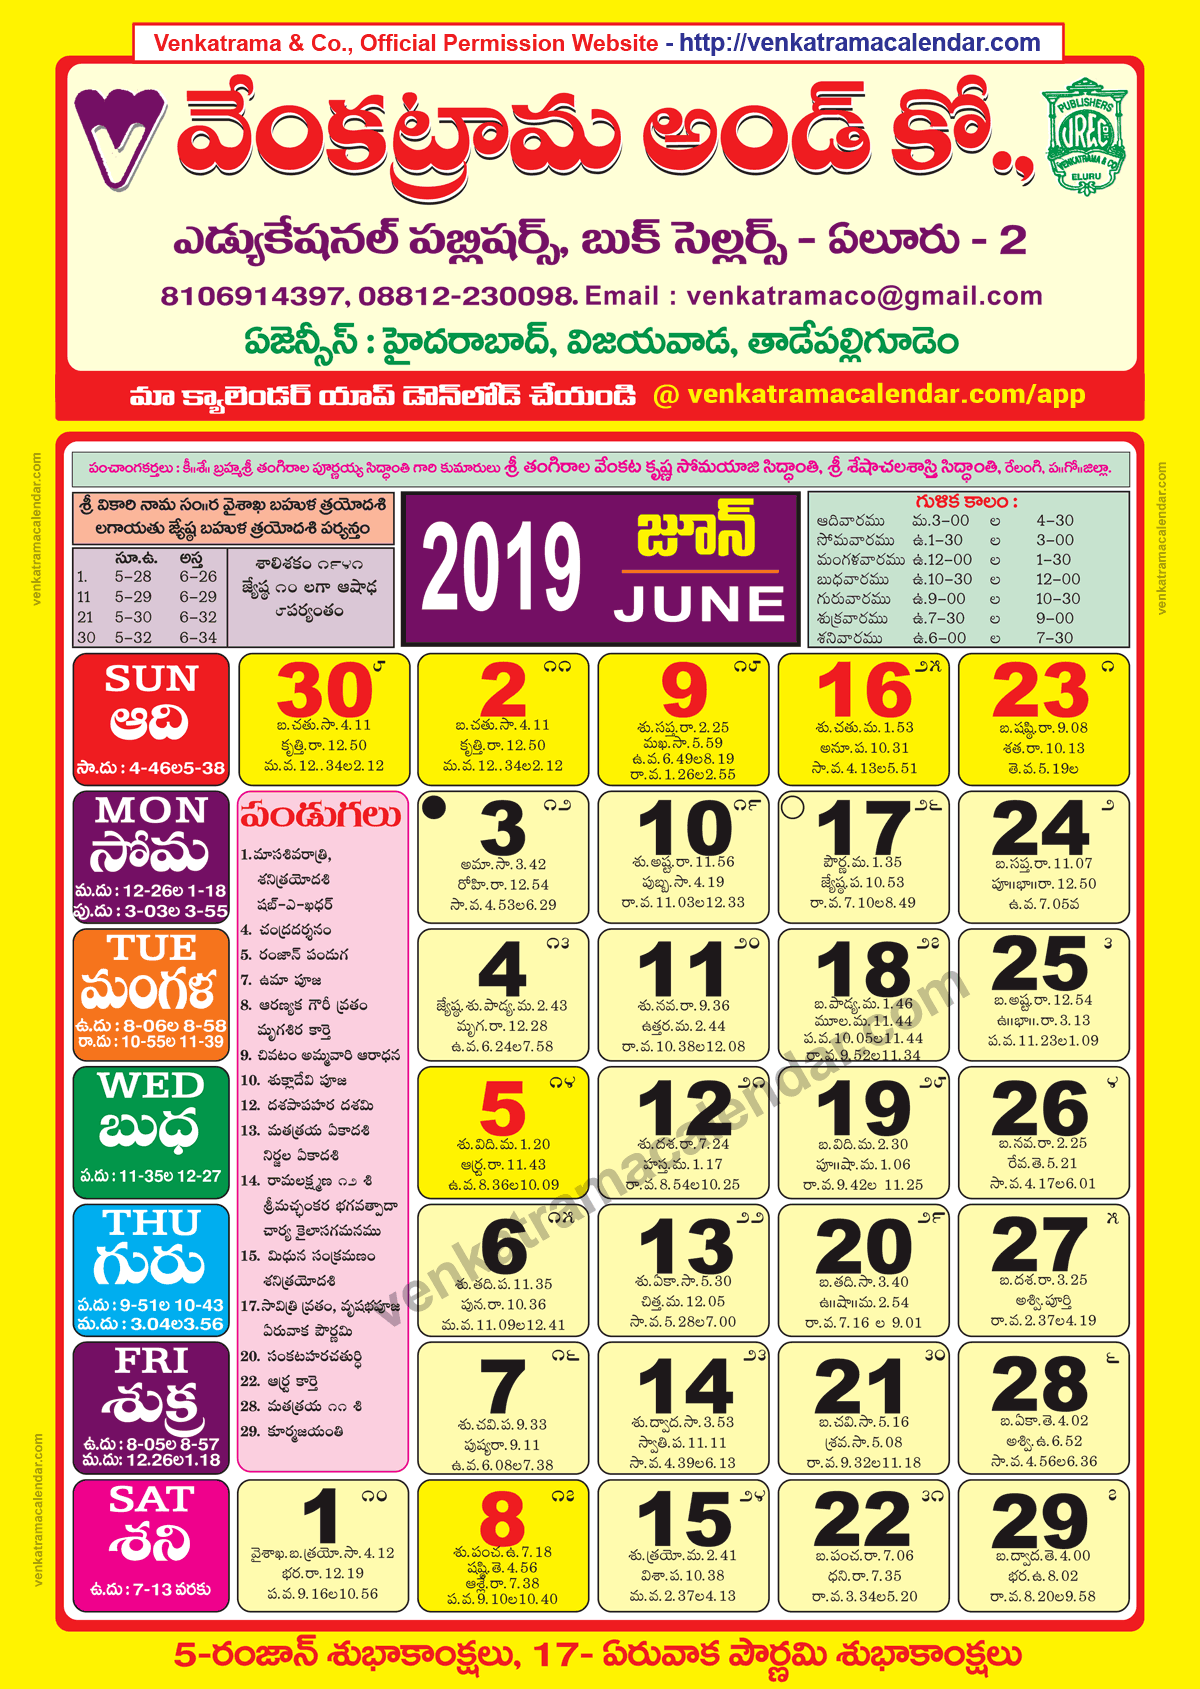 venkatrama-co-2019-june-telugu-calendar-colour